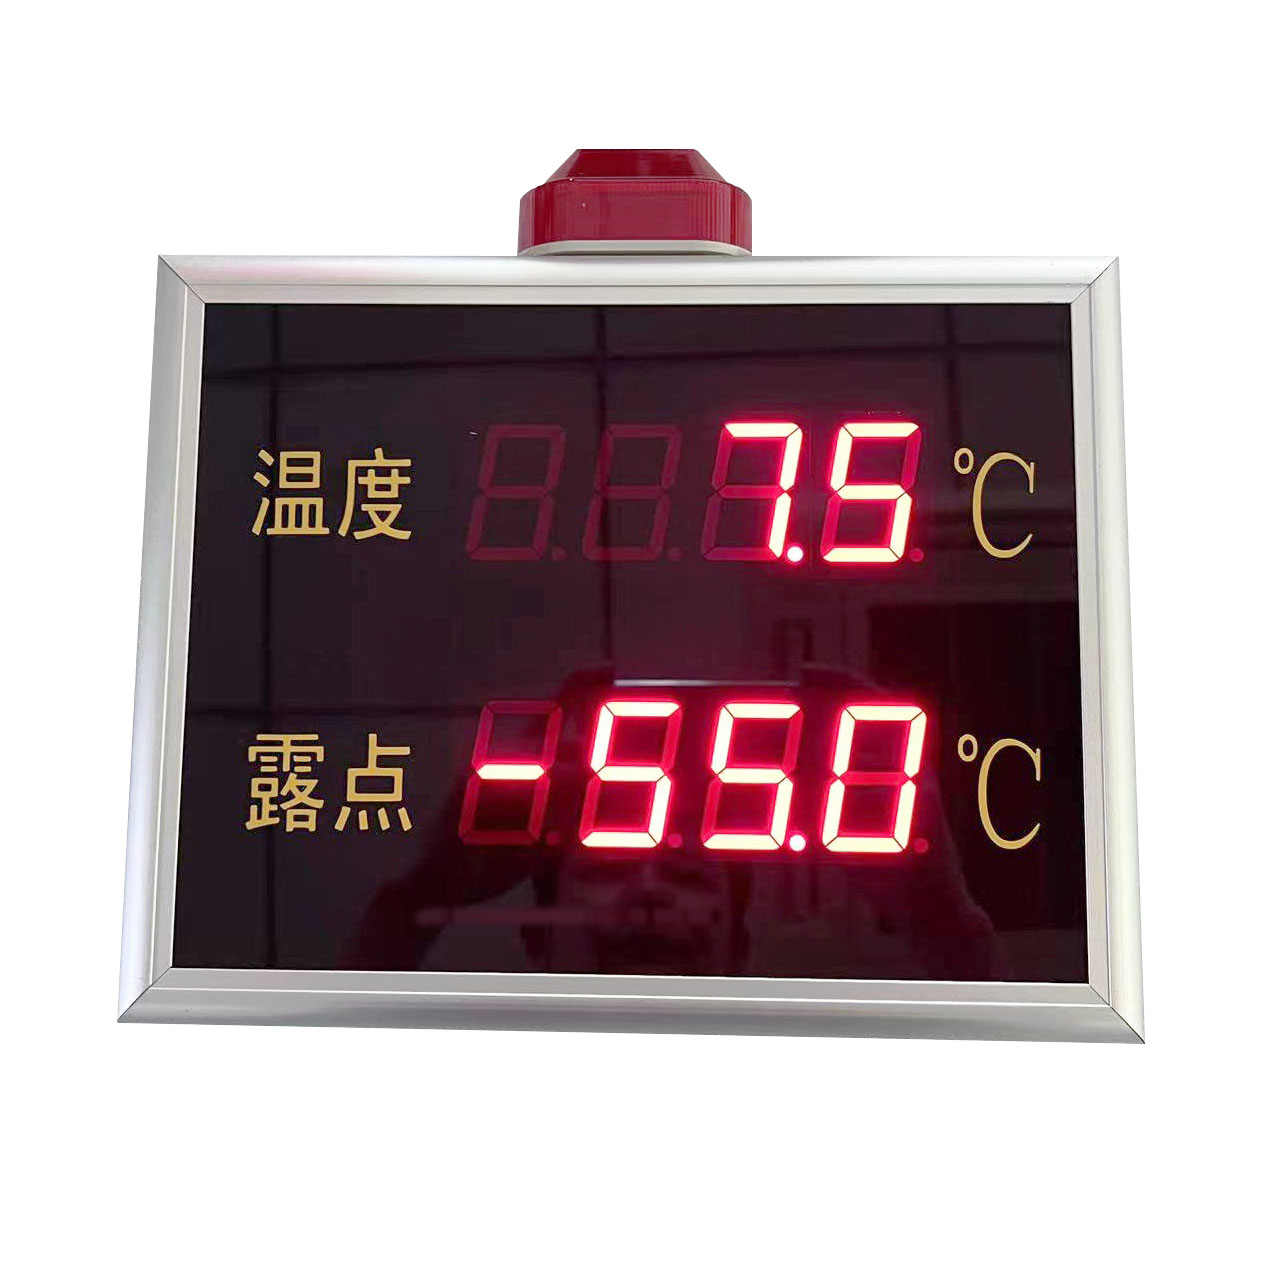 温度露点监测显示大屏HKT800